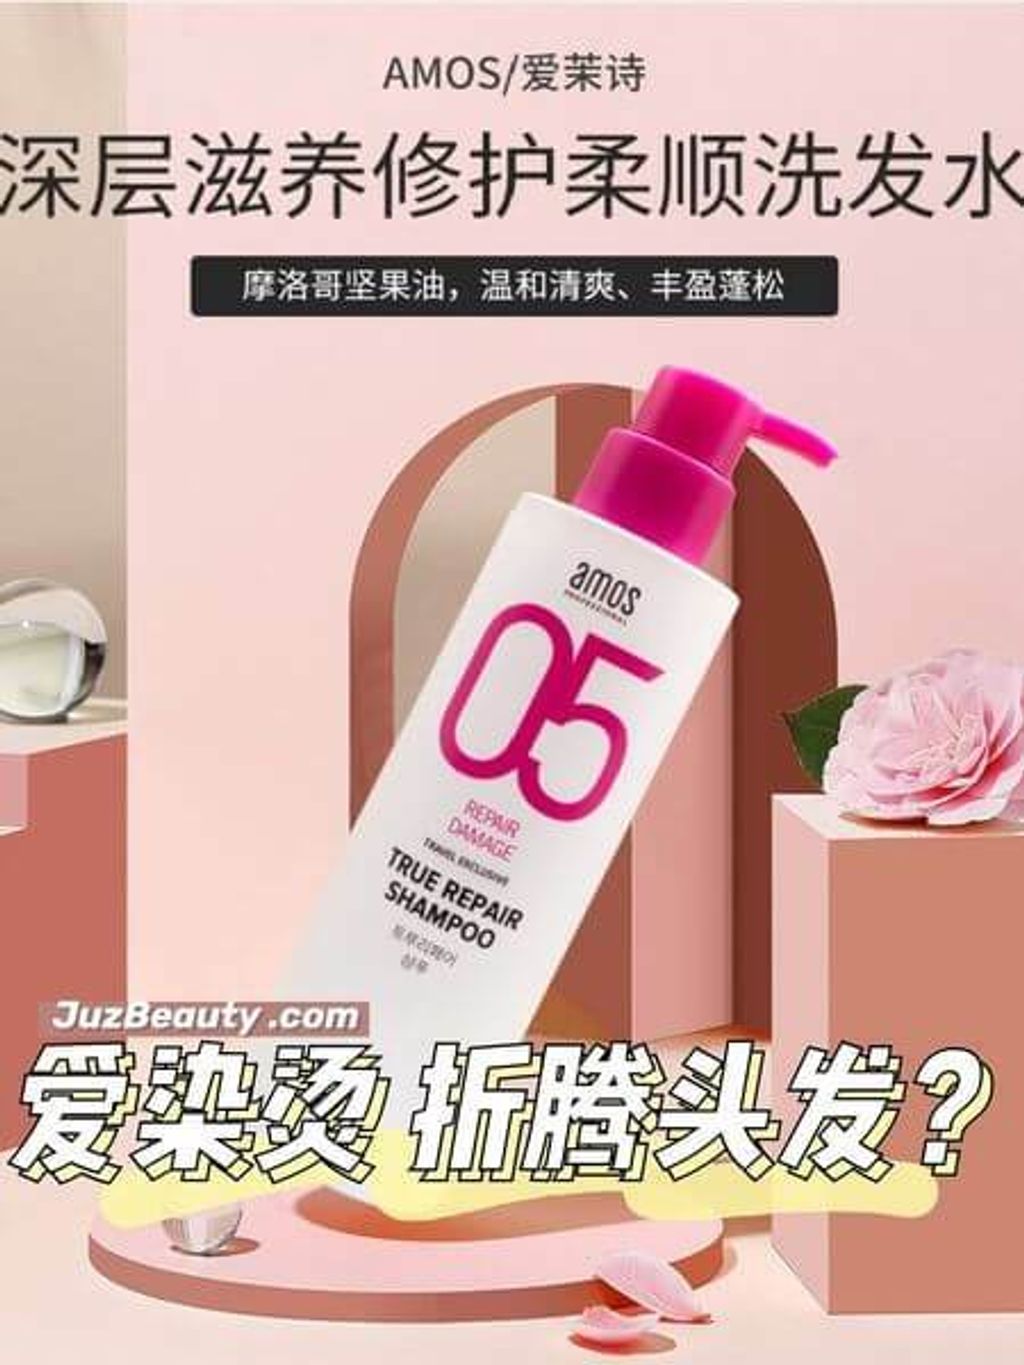 JuzBeauty_JuzBeautyMalaysia_JuzPretty_Authentic_Kbeauty_Malaysia_Skin_Care_Cosmetics_Jbeauty_Australia_Health_Care_Amos_05_True_Repair_Shampoo_ (14).jpg